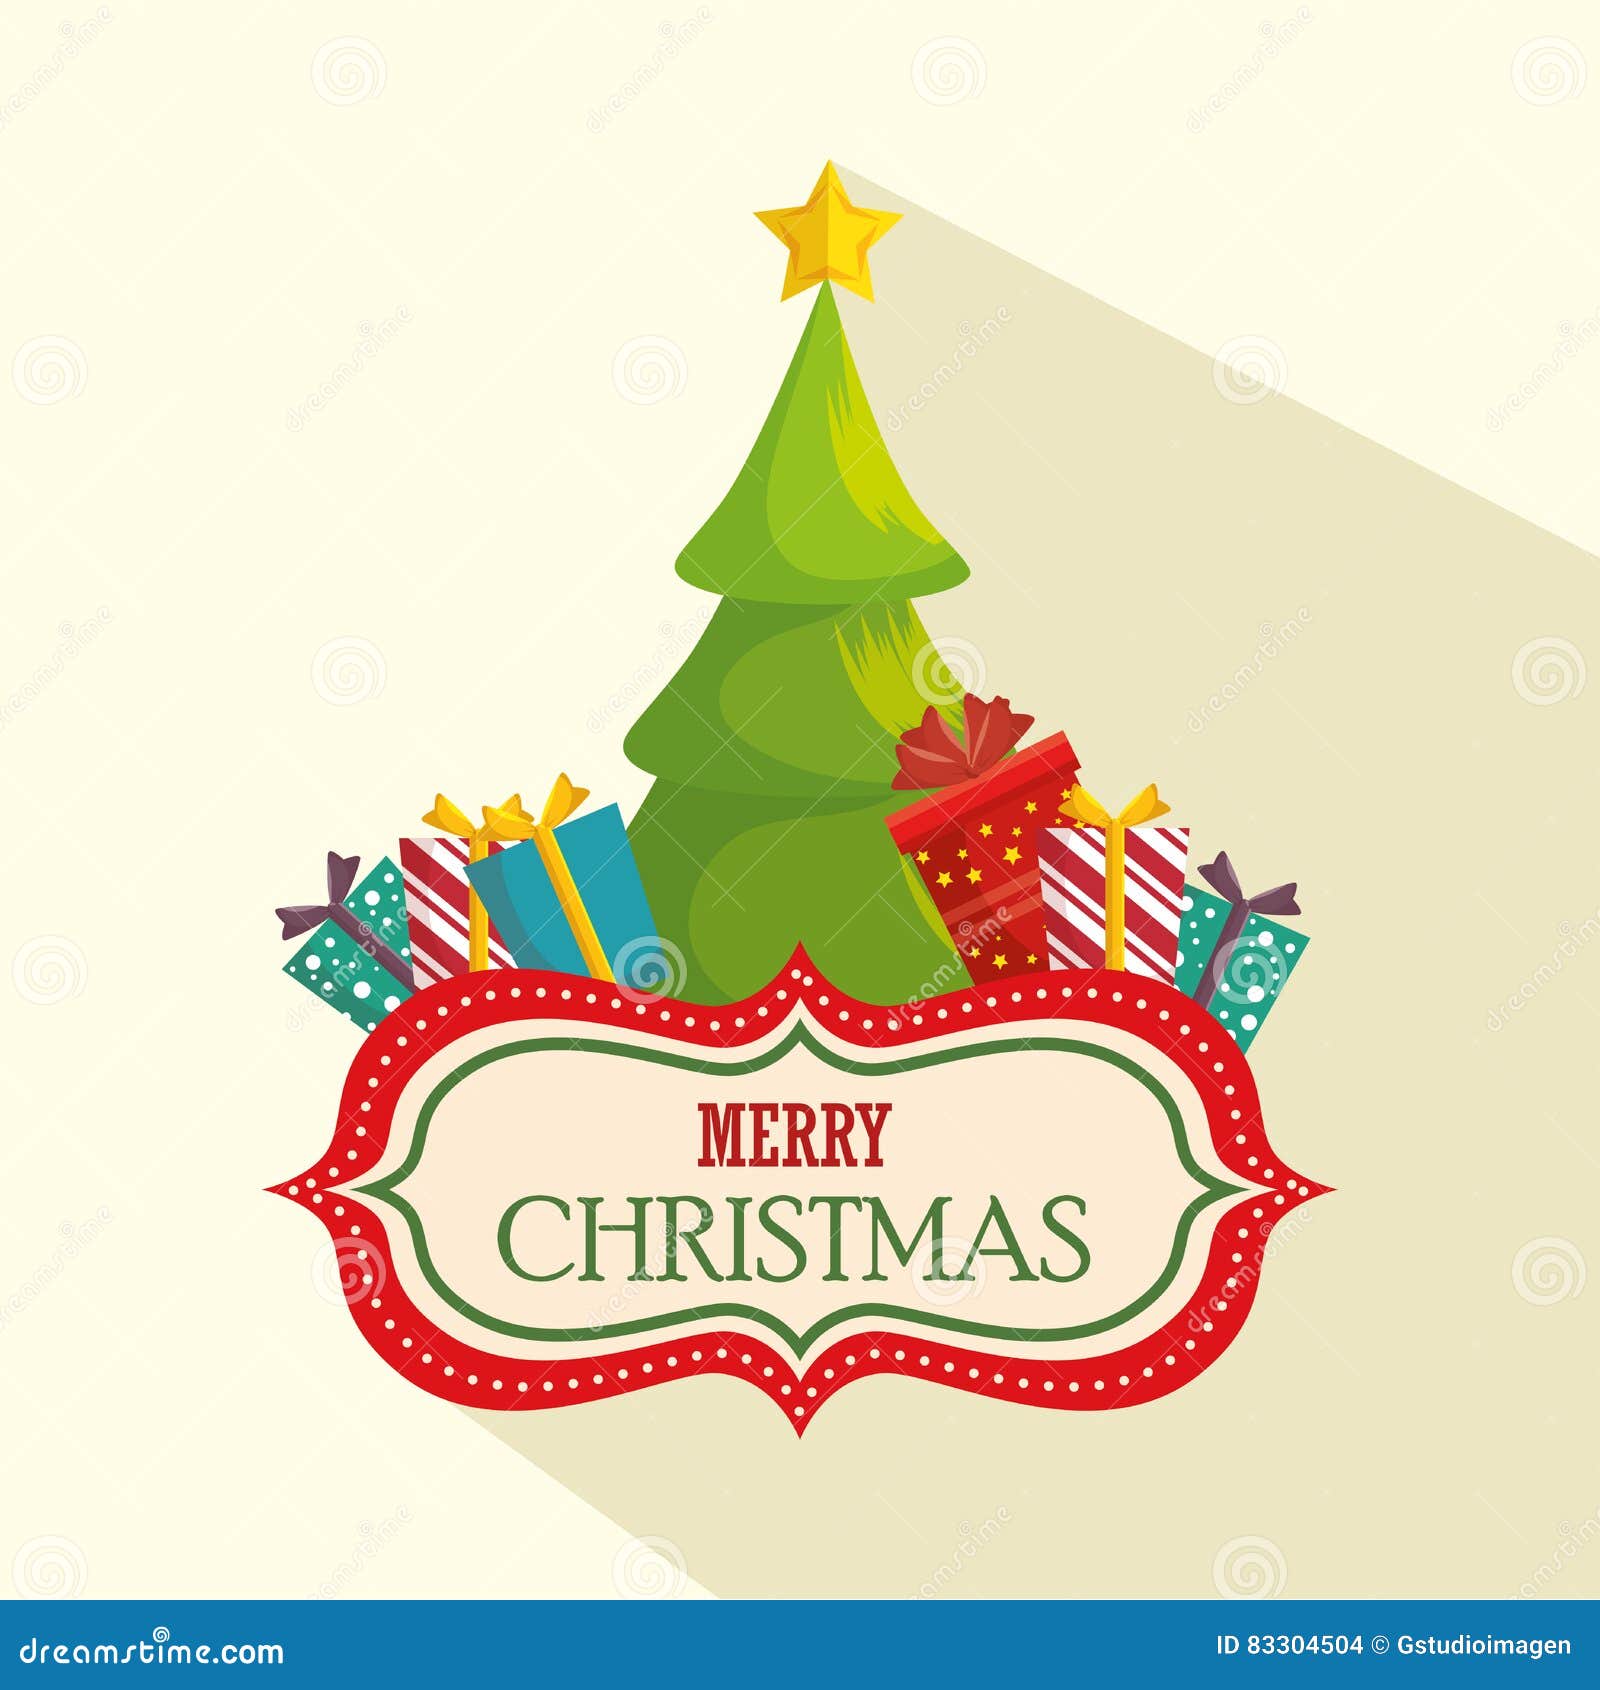 Happy merry christmas tree stock illustration. Illustration of icon ...